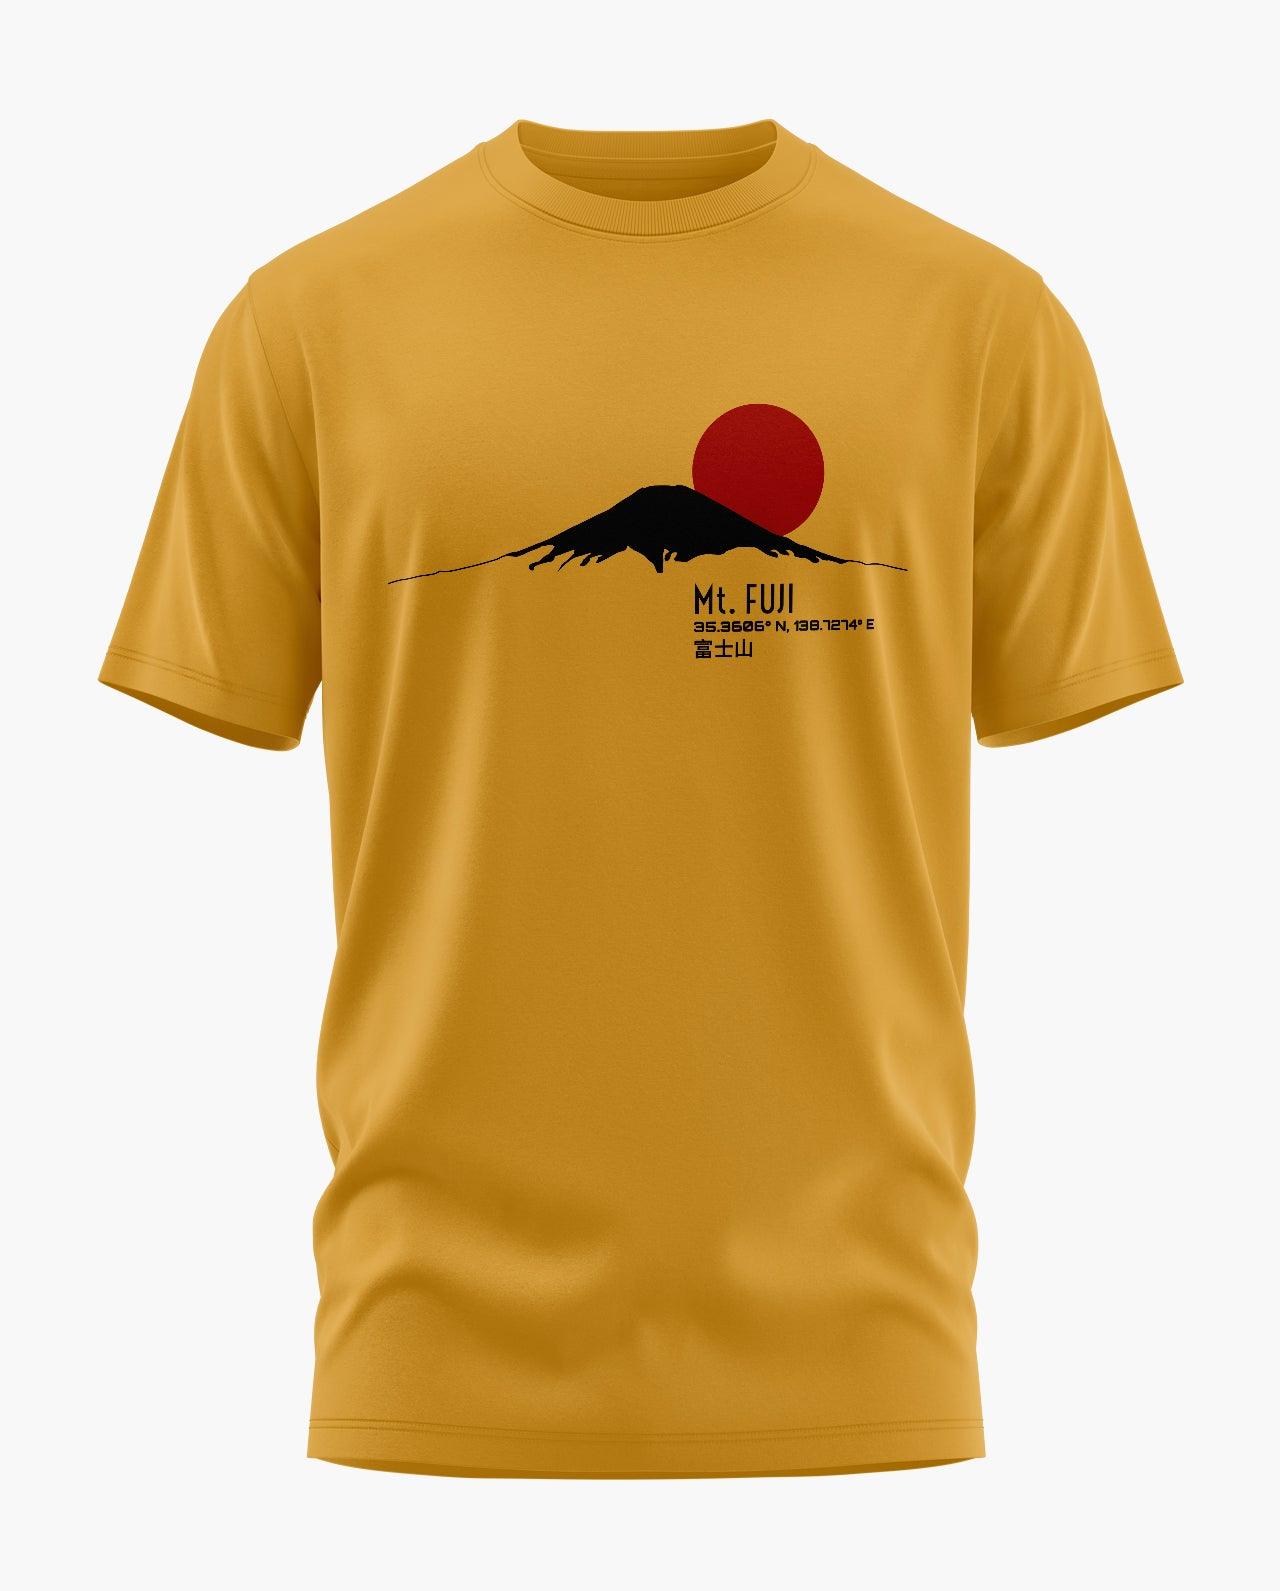 Mount Fuji T-Shirt - Aero Armour